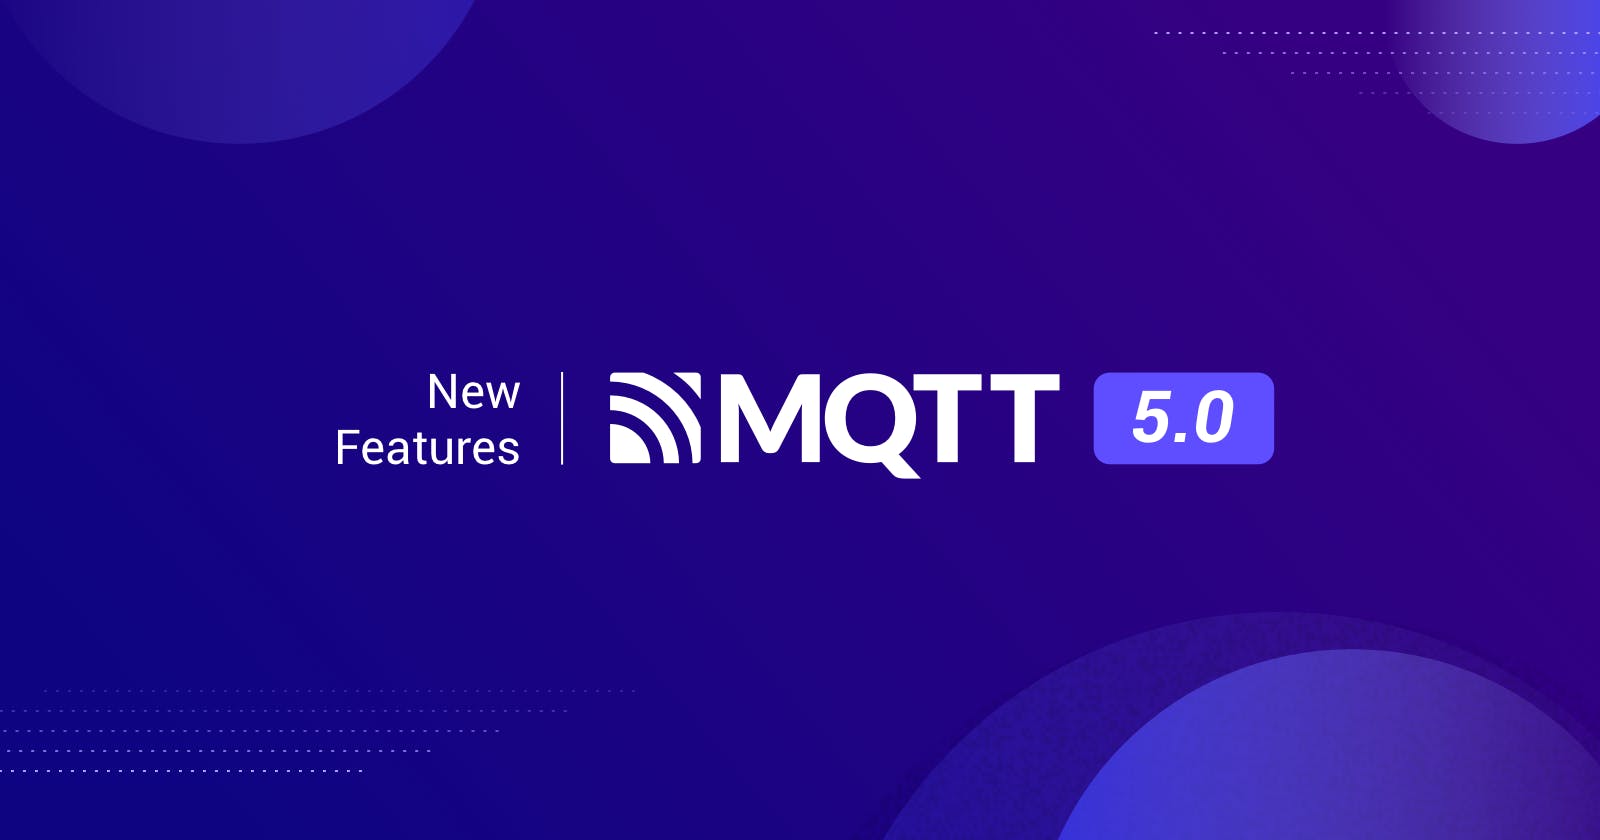 Flow Control - MQTT 5.0 New Features